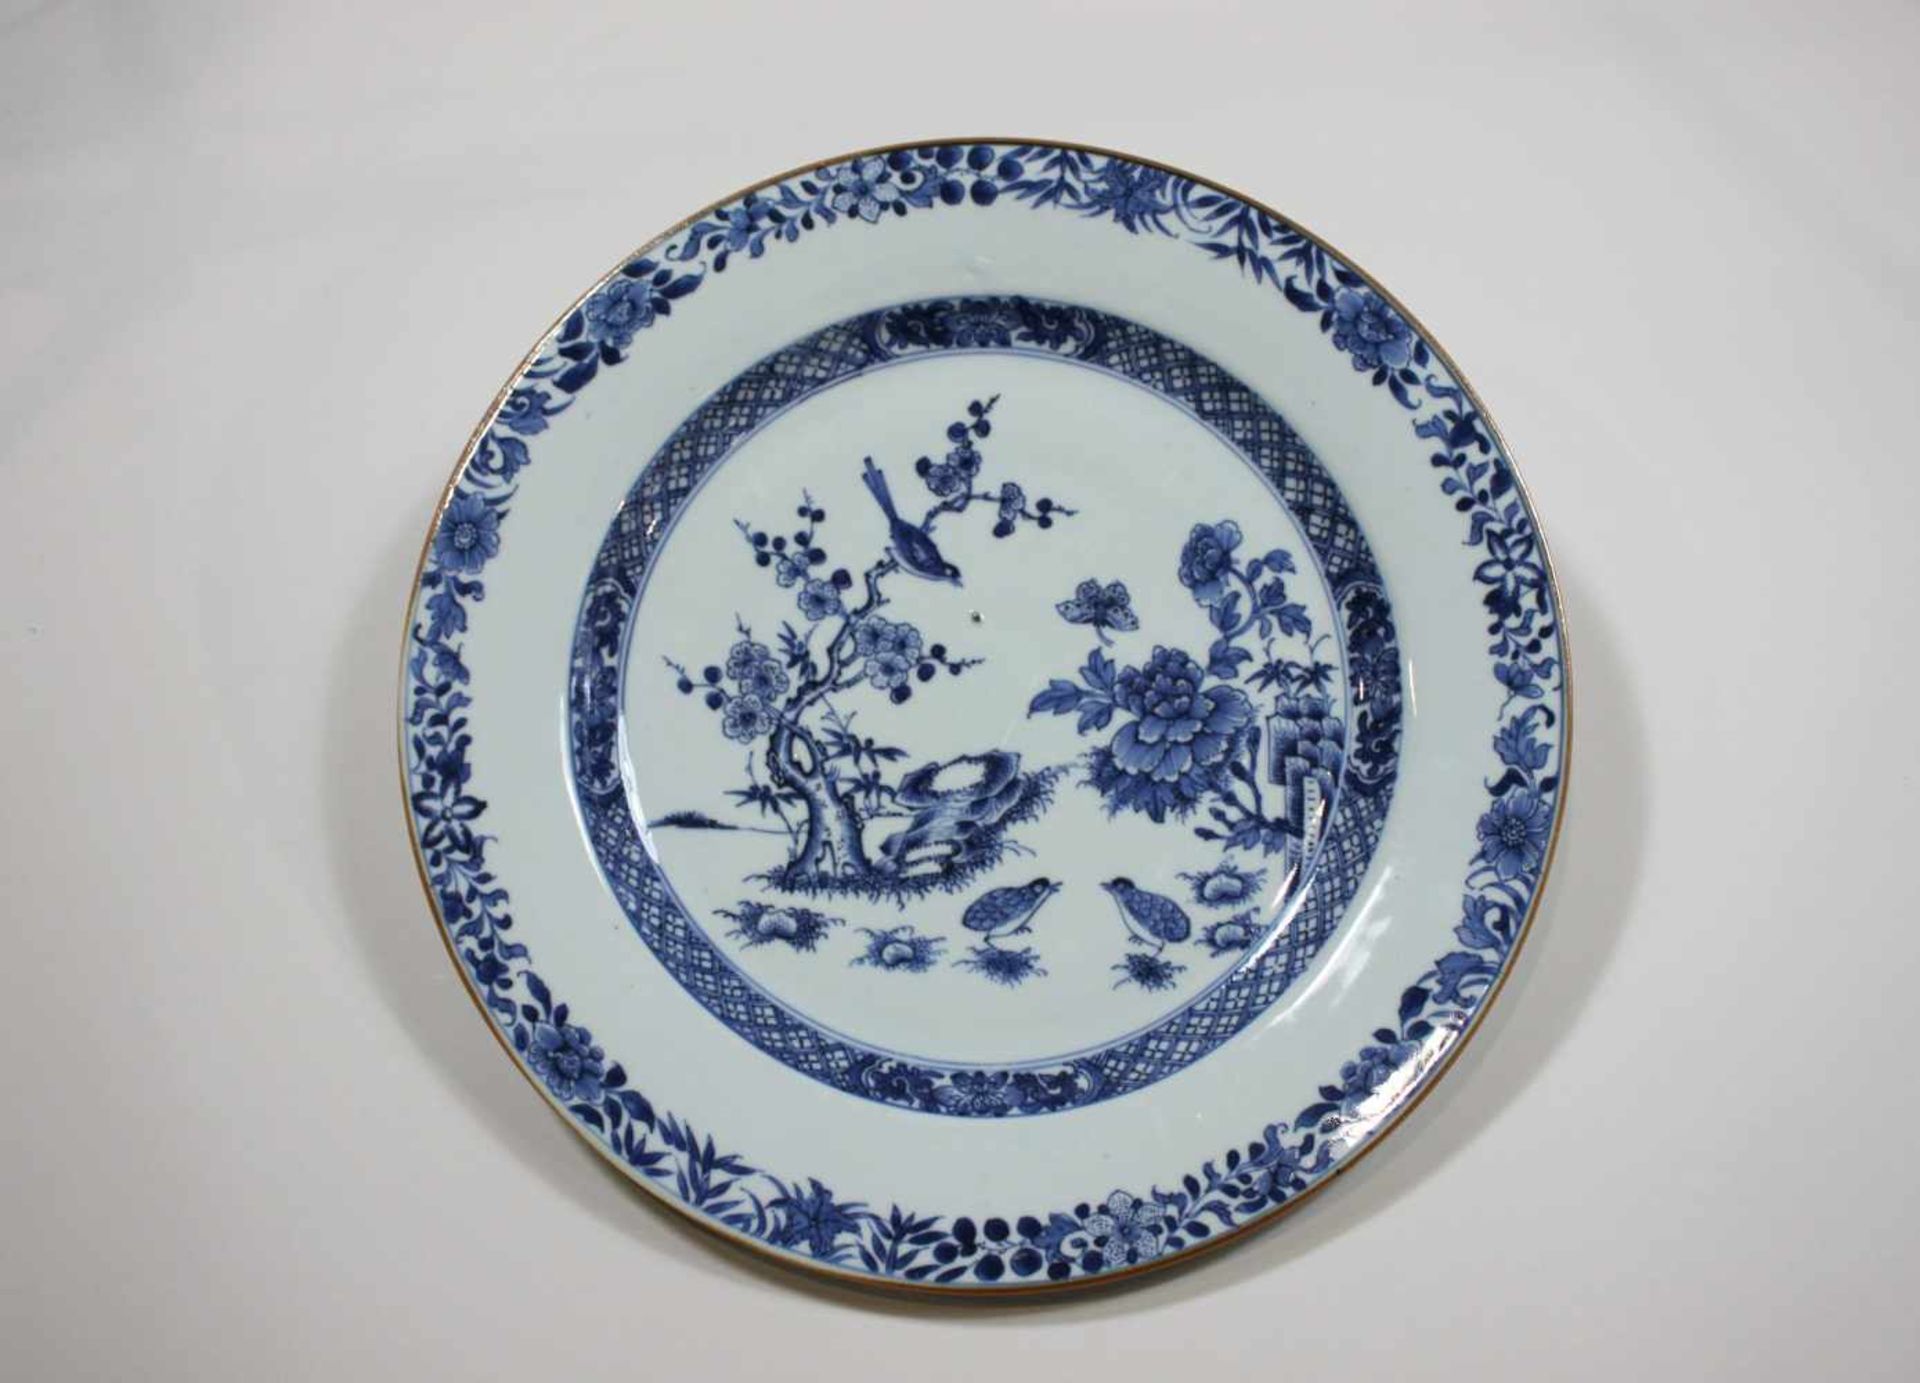 Großer Porzellanteller, China 18. Jh., blaues, florales Dekor unter Glasur. Dm.: 31,5 cm.